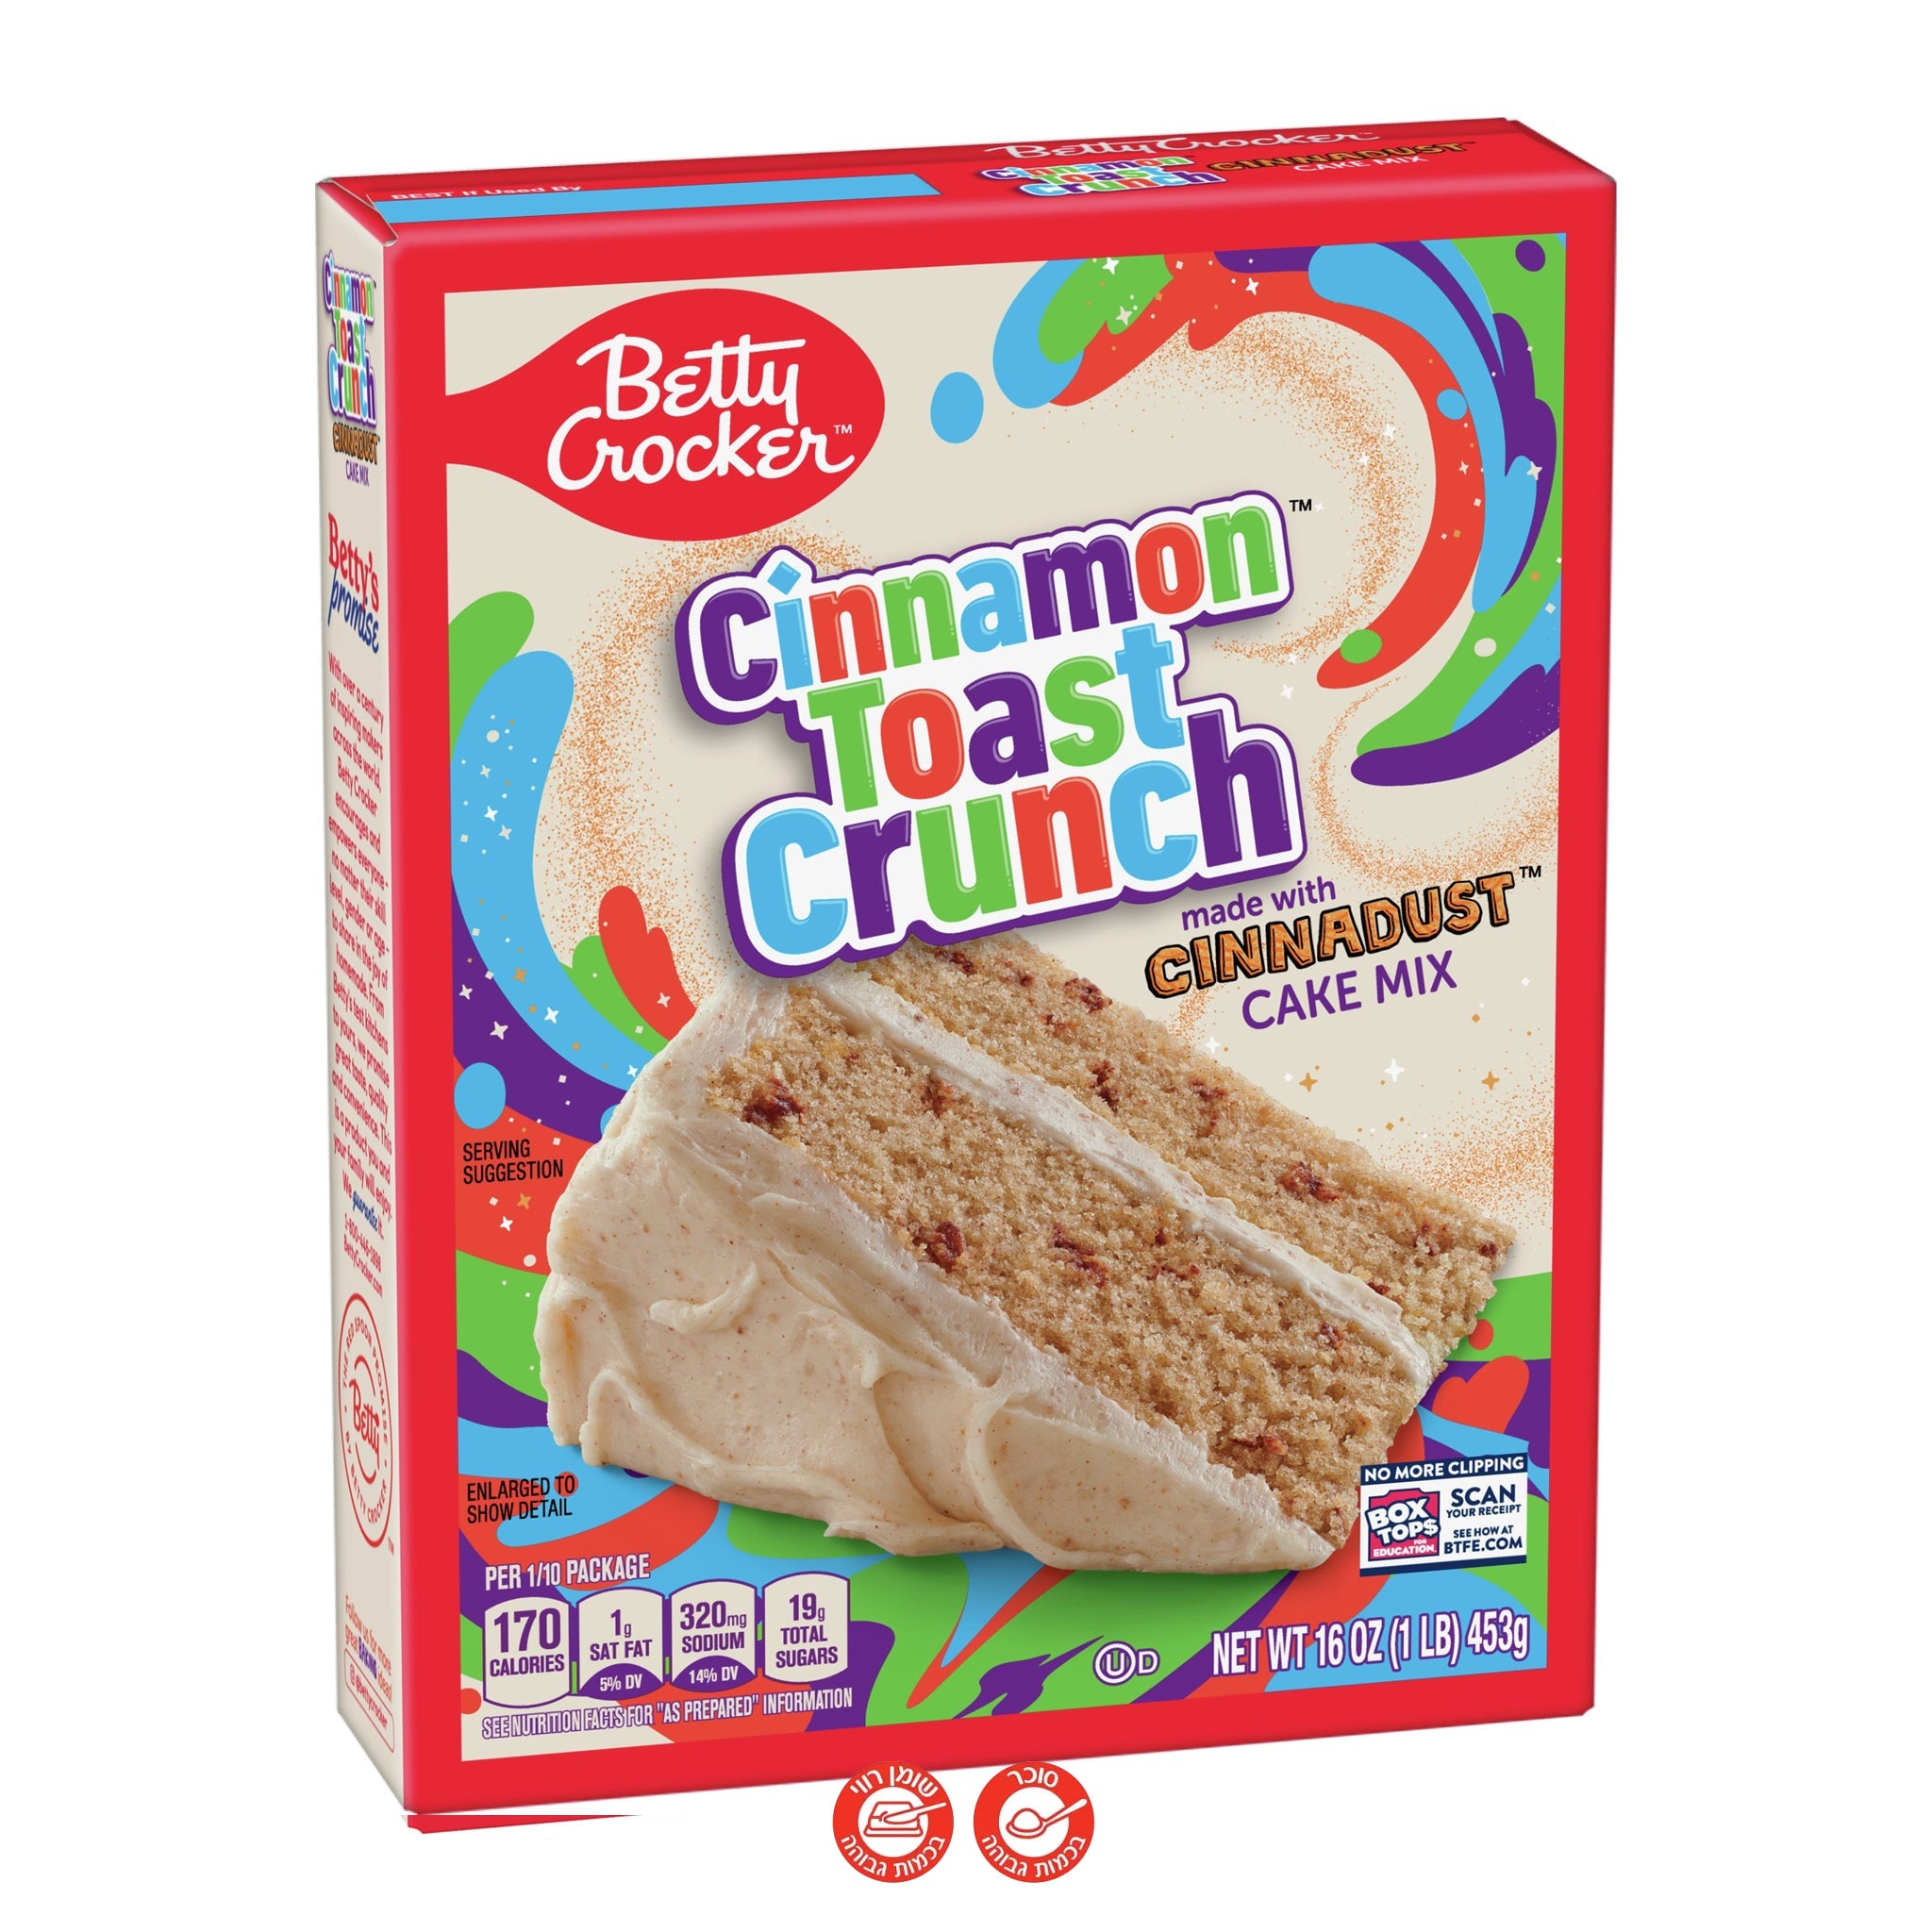 Betty Crocker Cinnamon Toast Crunch תערובת להכנת עוגת קינמון קראנץ עוגיות